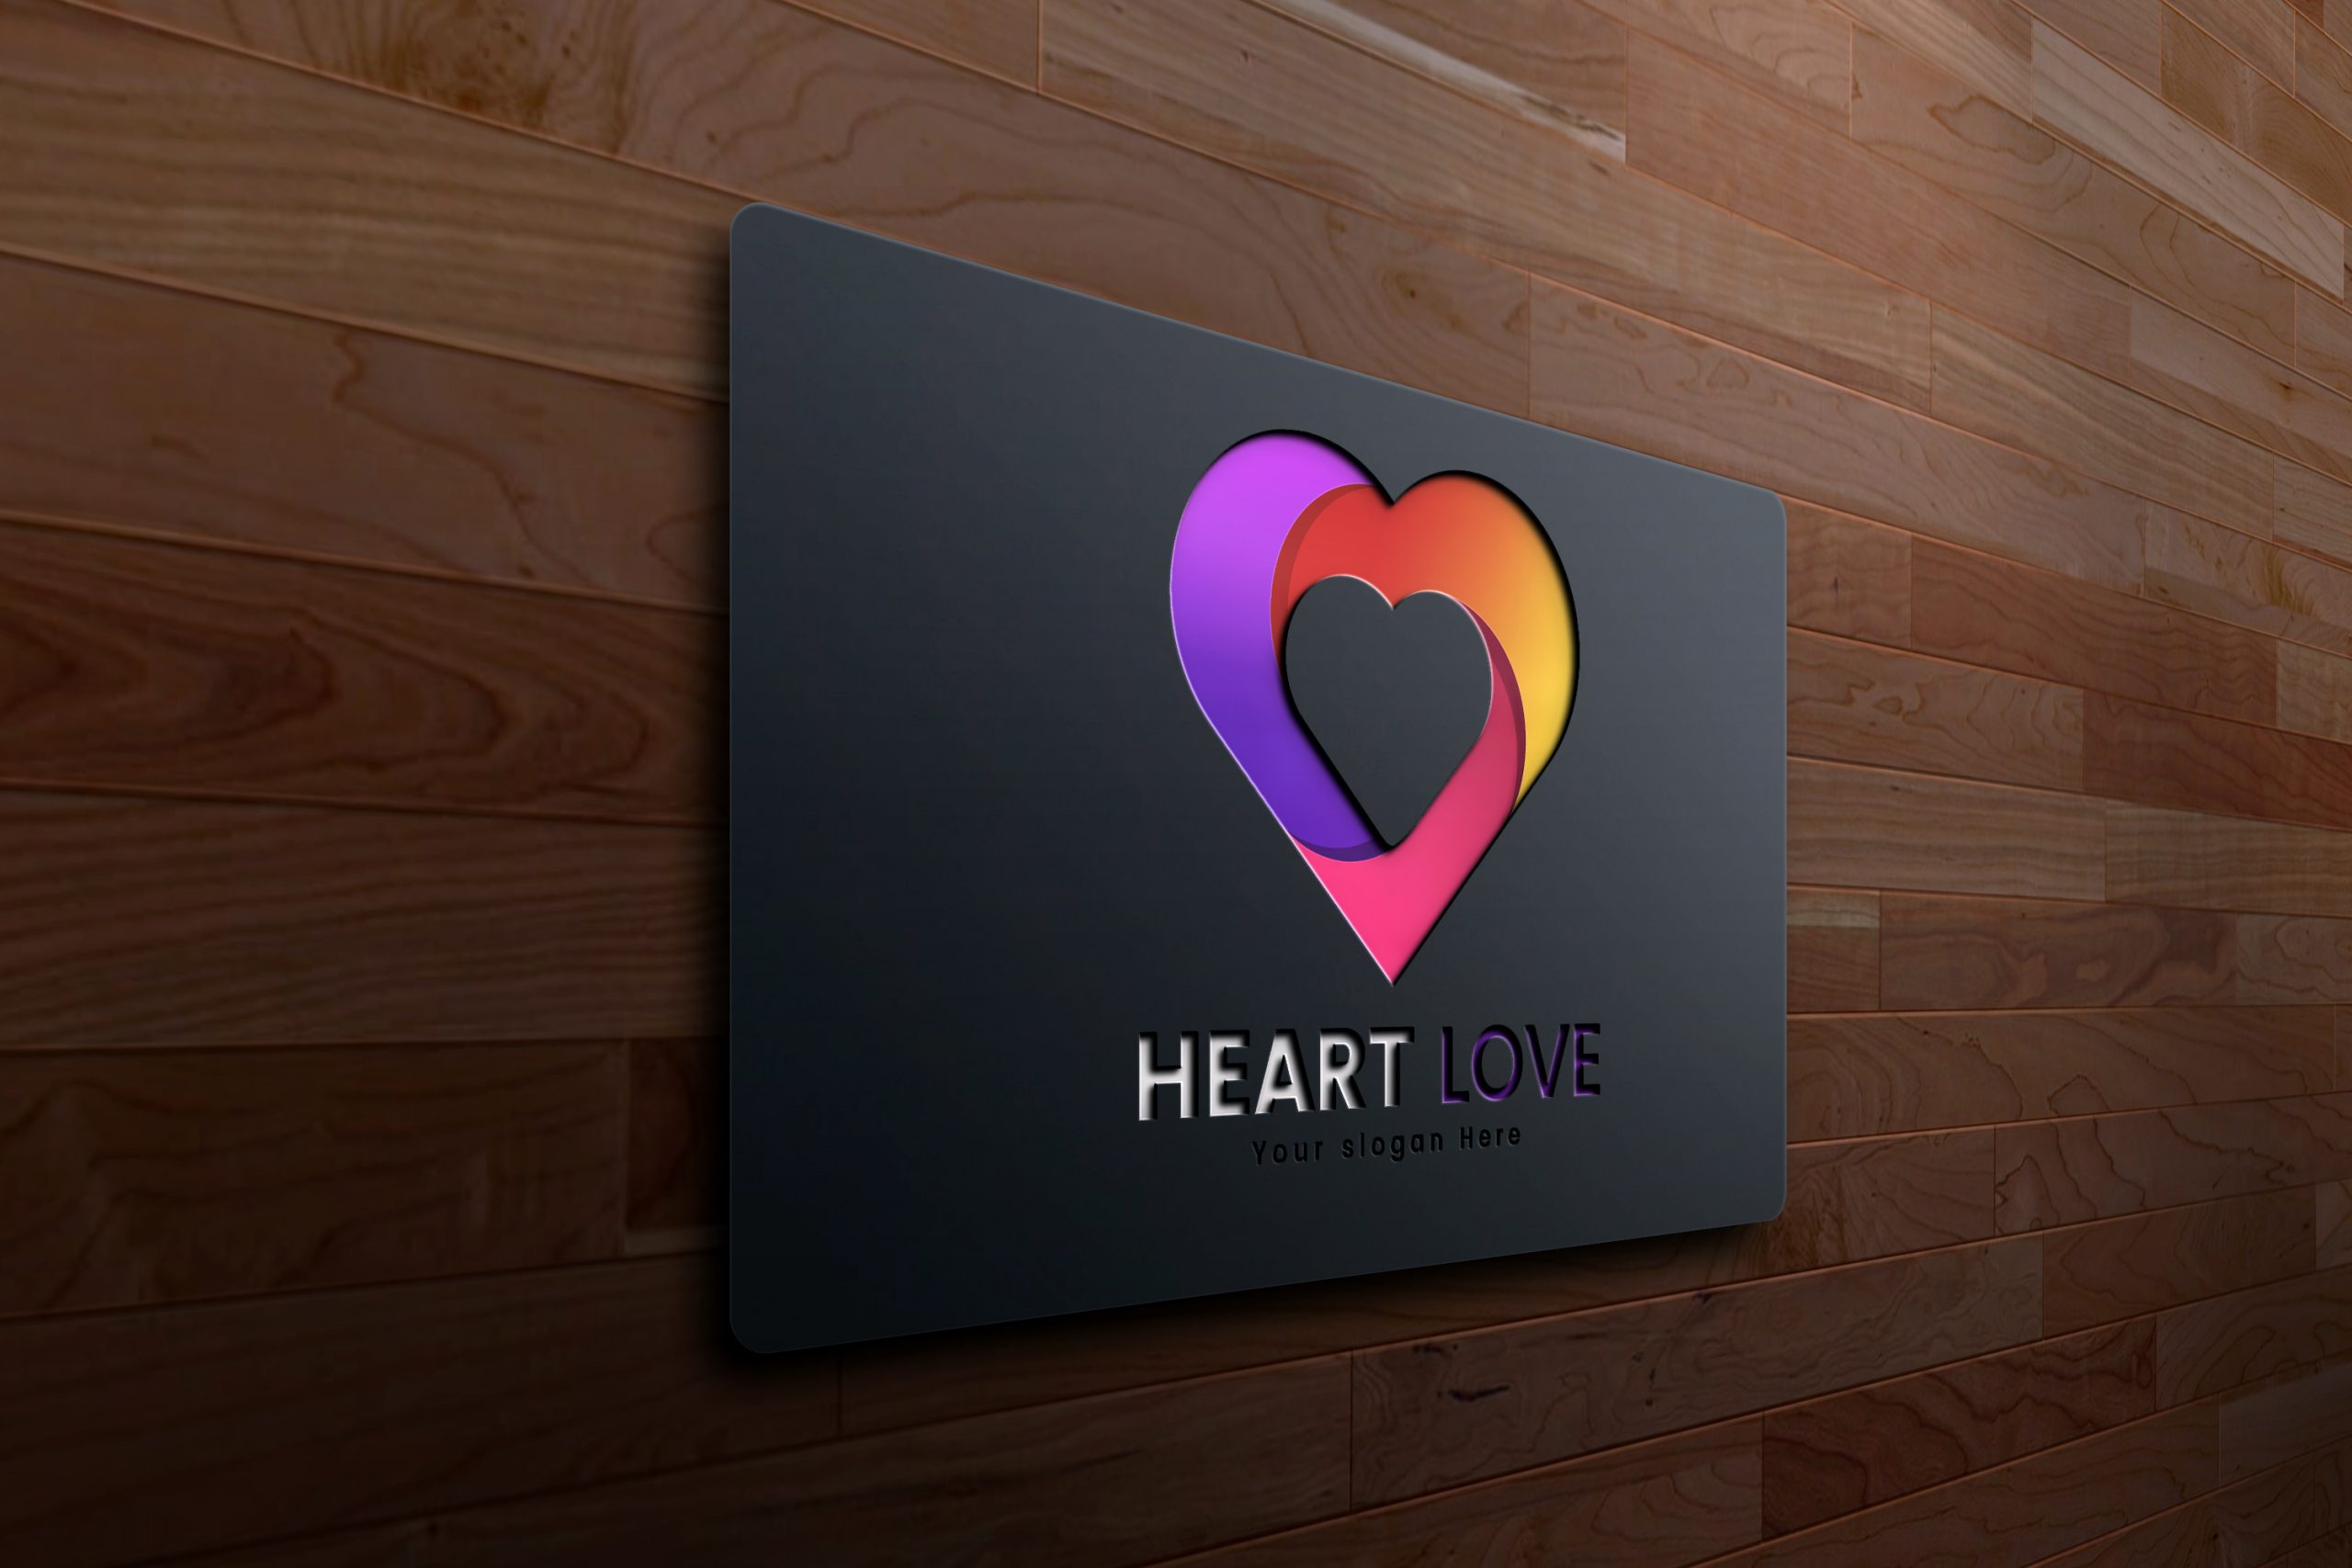 Colorful Heart Love Logo Design